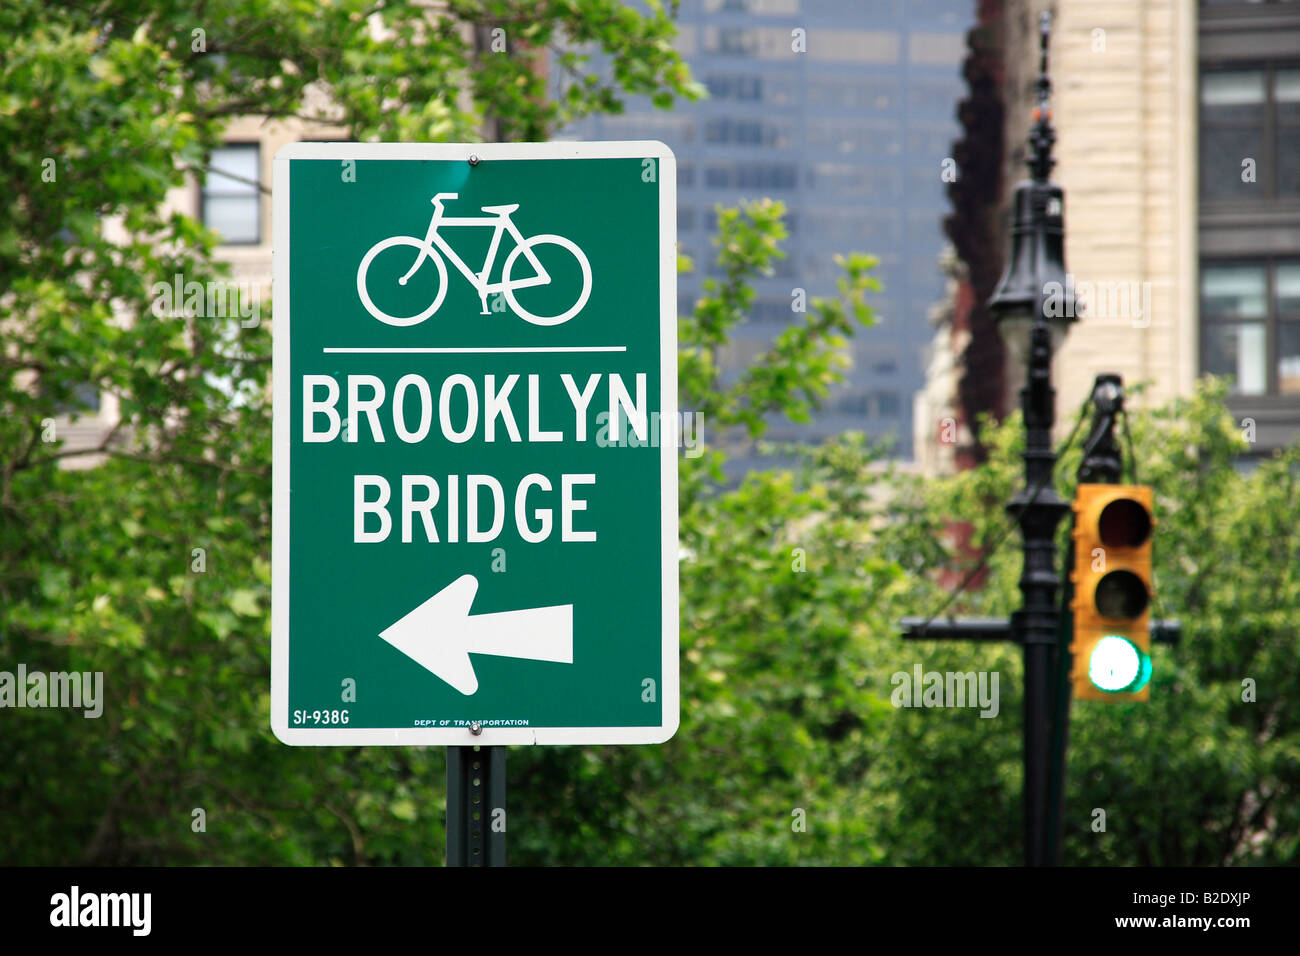 Brooklyn Bridge street sign - New York City, USA Stock Photo